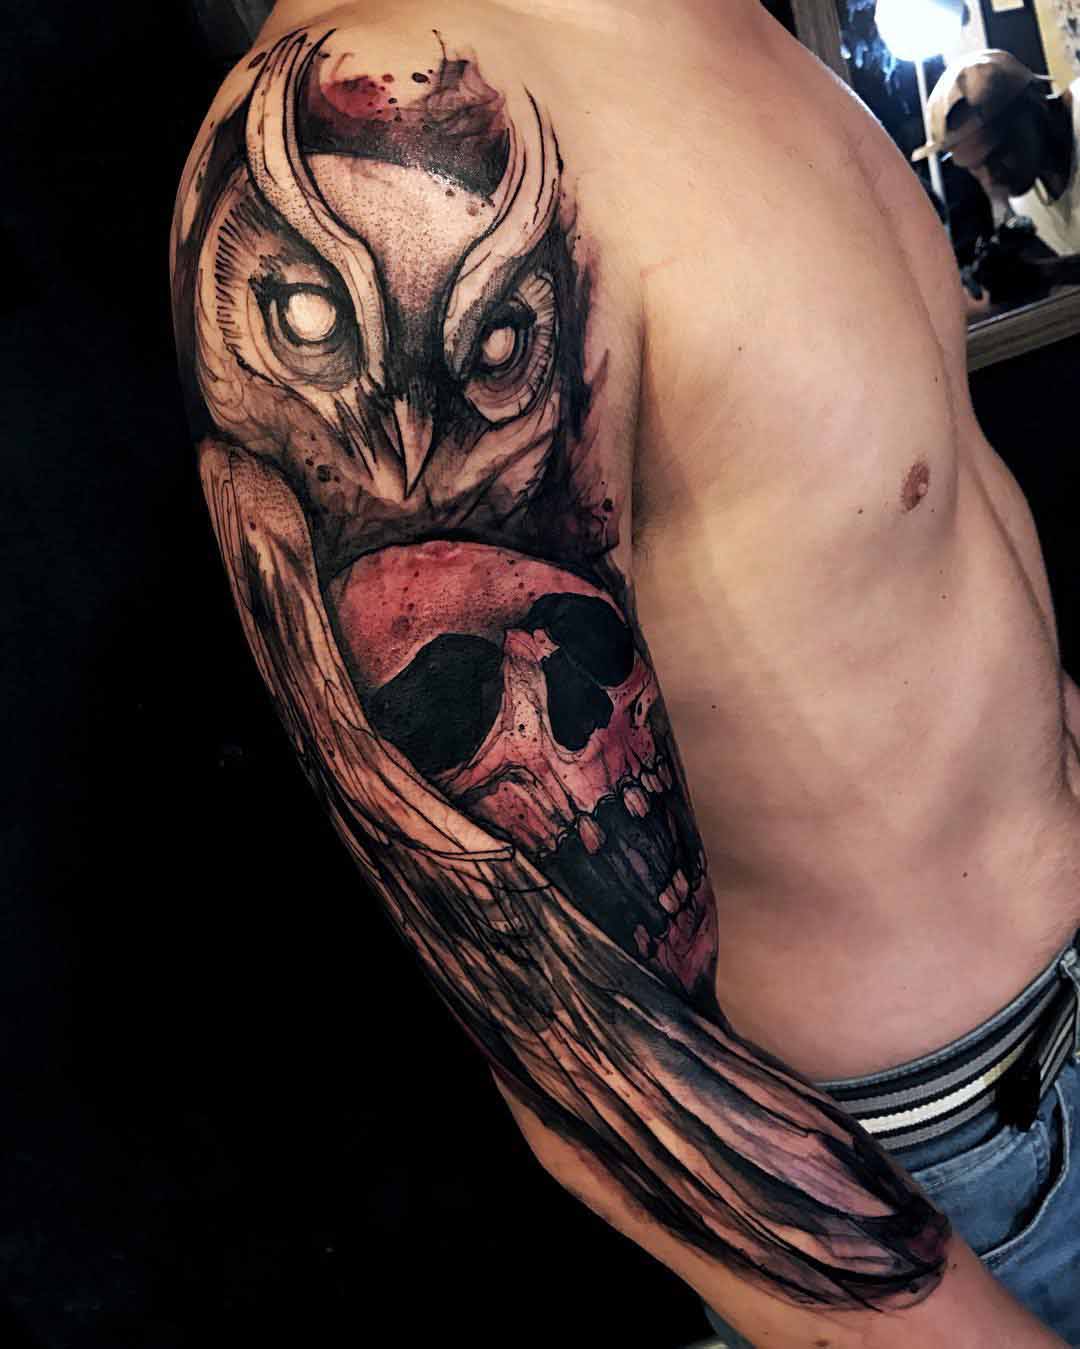 Shoulder Sleeve Owl Tattoo - Best Tattoo Ideas Gallery